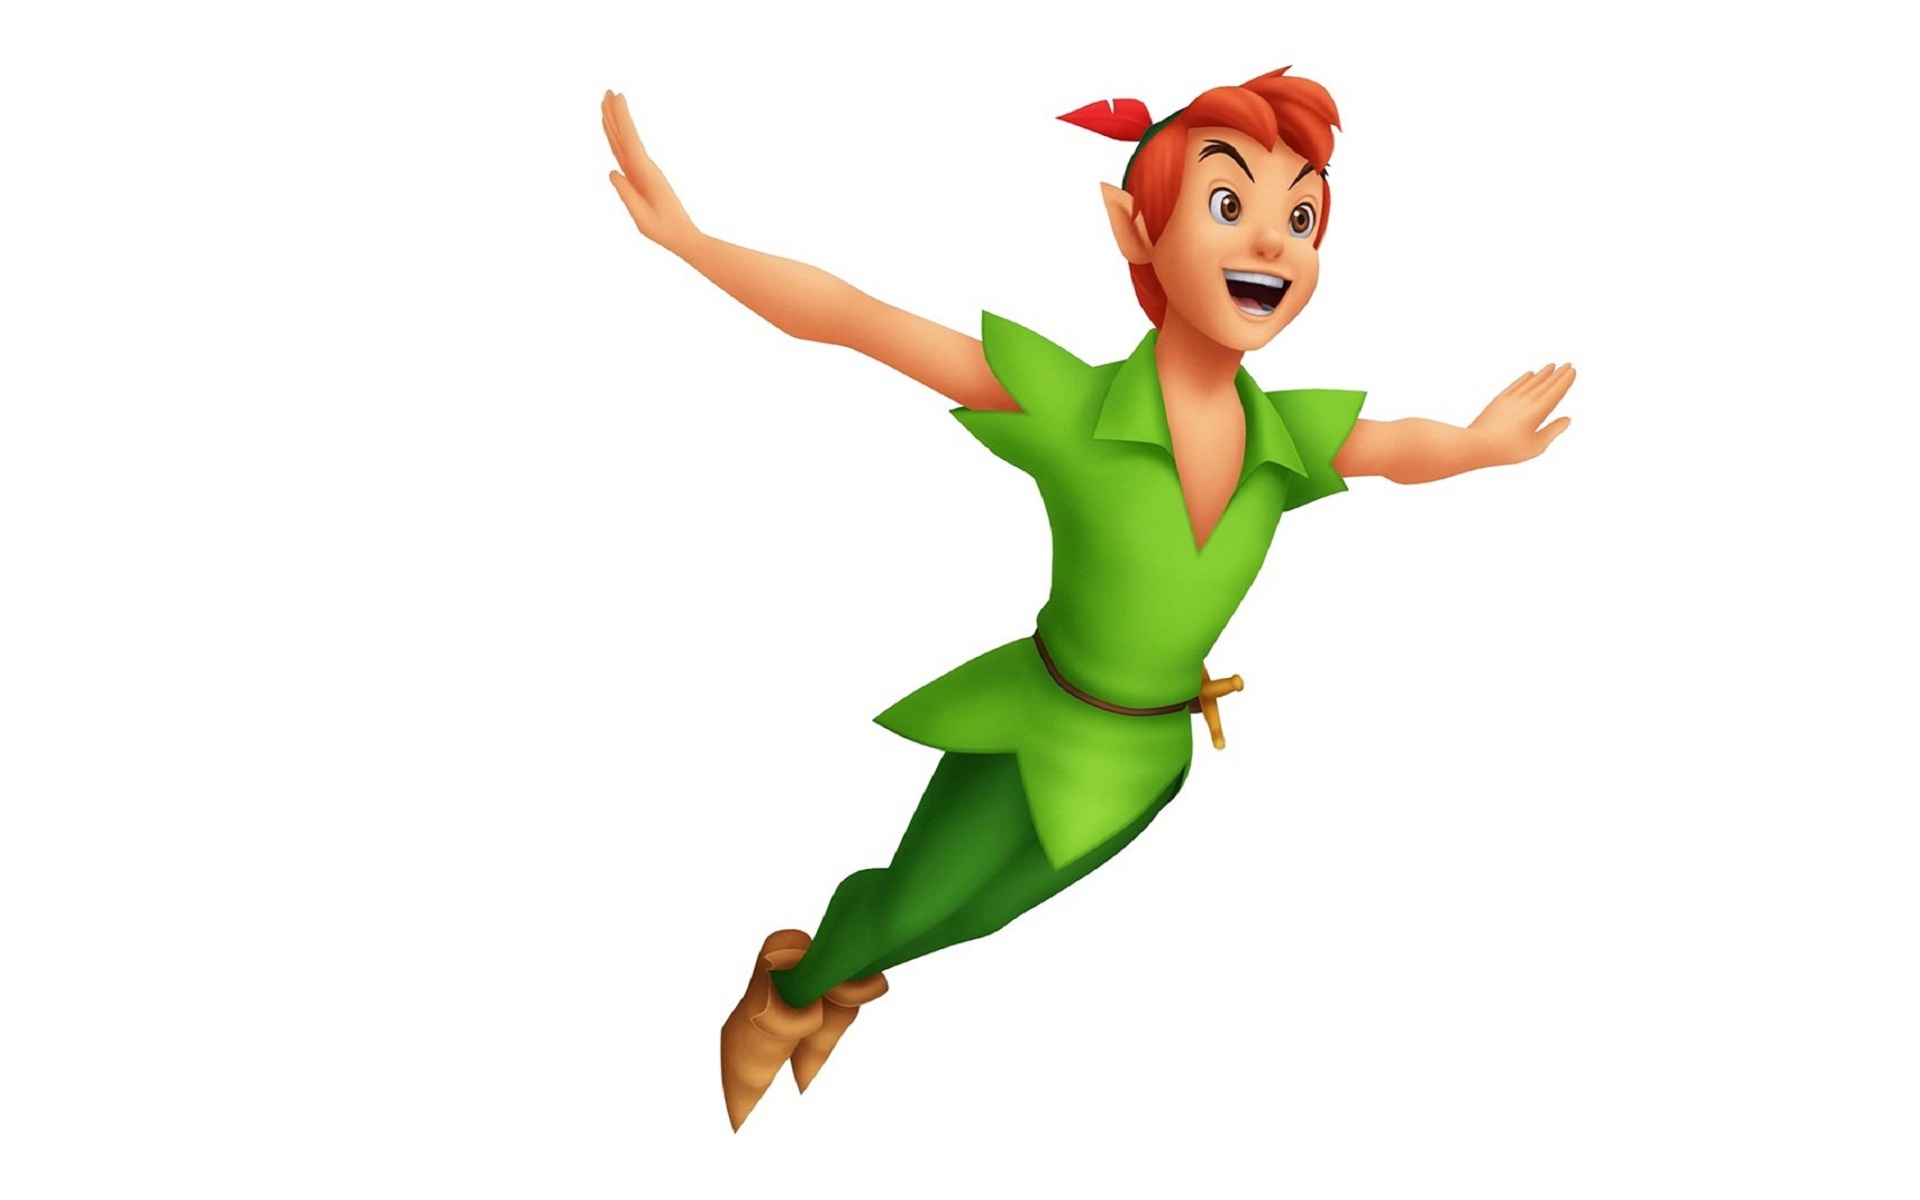 Peter Pan. Peter Pan and Wendy. Peter Pan MINALIMA. Peter Pan for Kids. Peter pan is